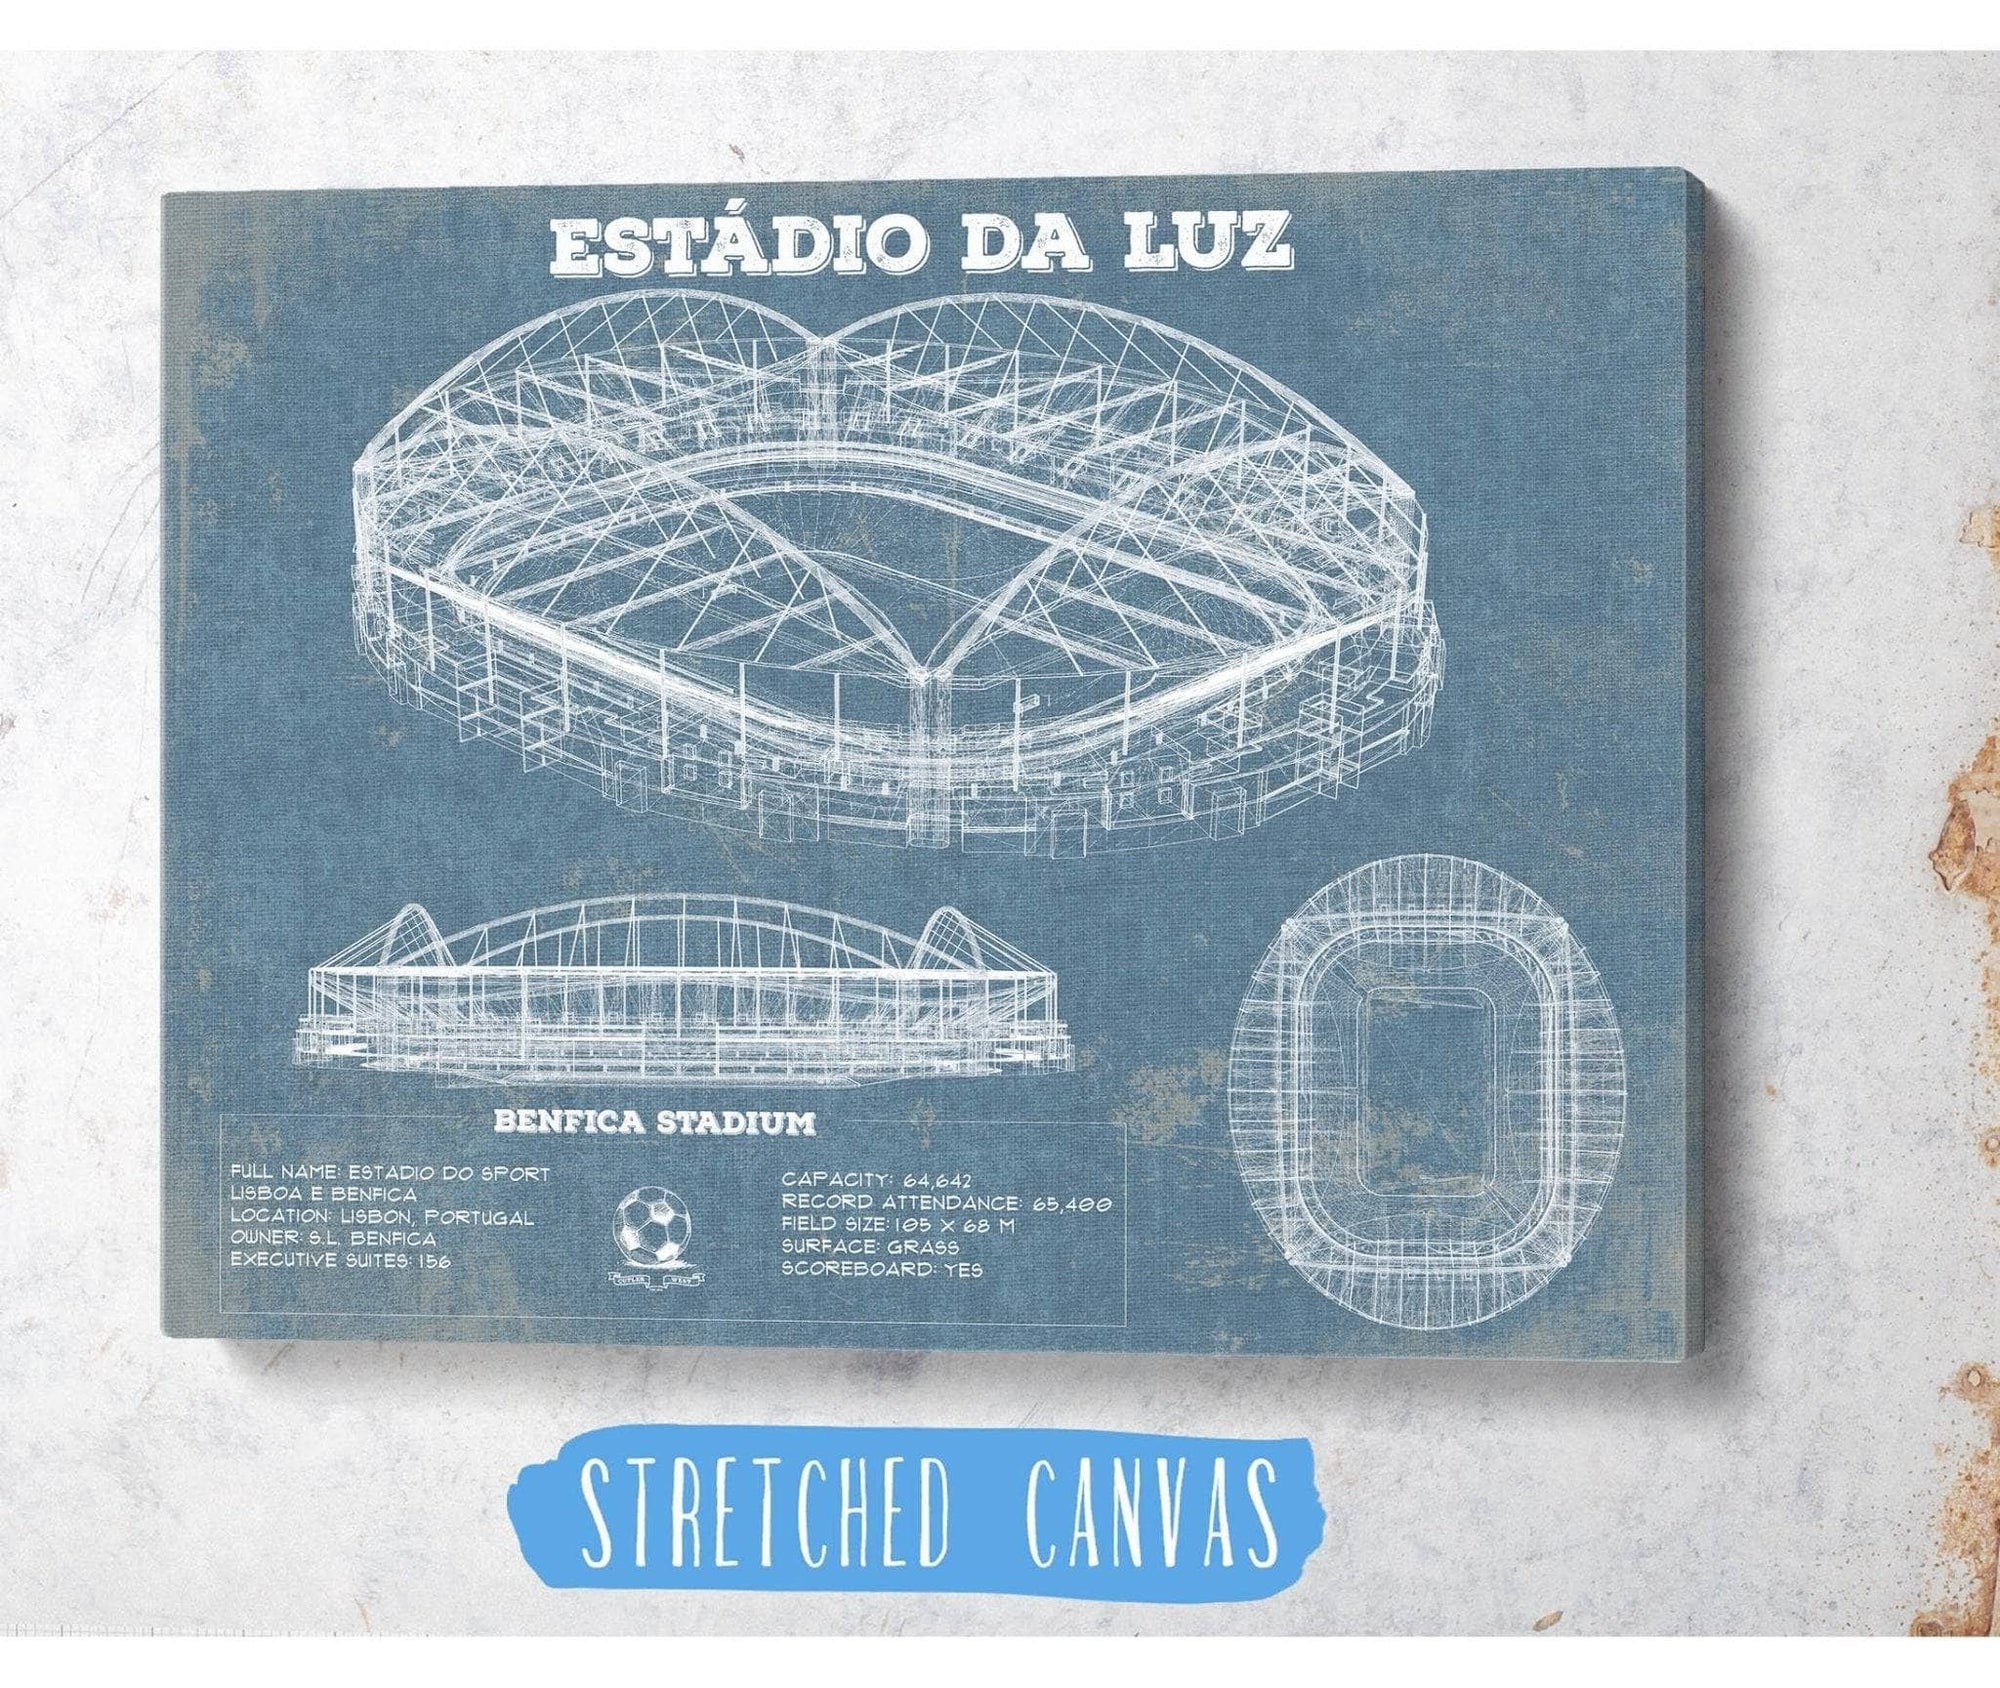 Cutler West Soccer Collection Estudio da Luz (Benfica Stadium) - Portugal National Football Team Blueprint Vintage Soccer Print